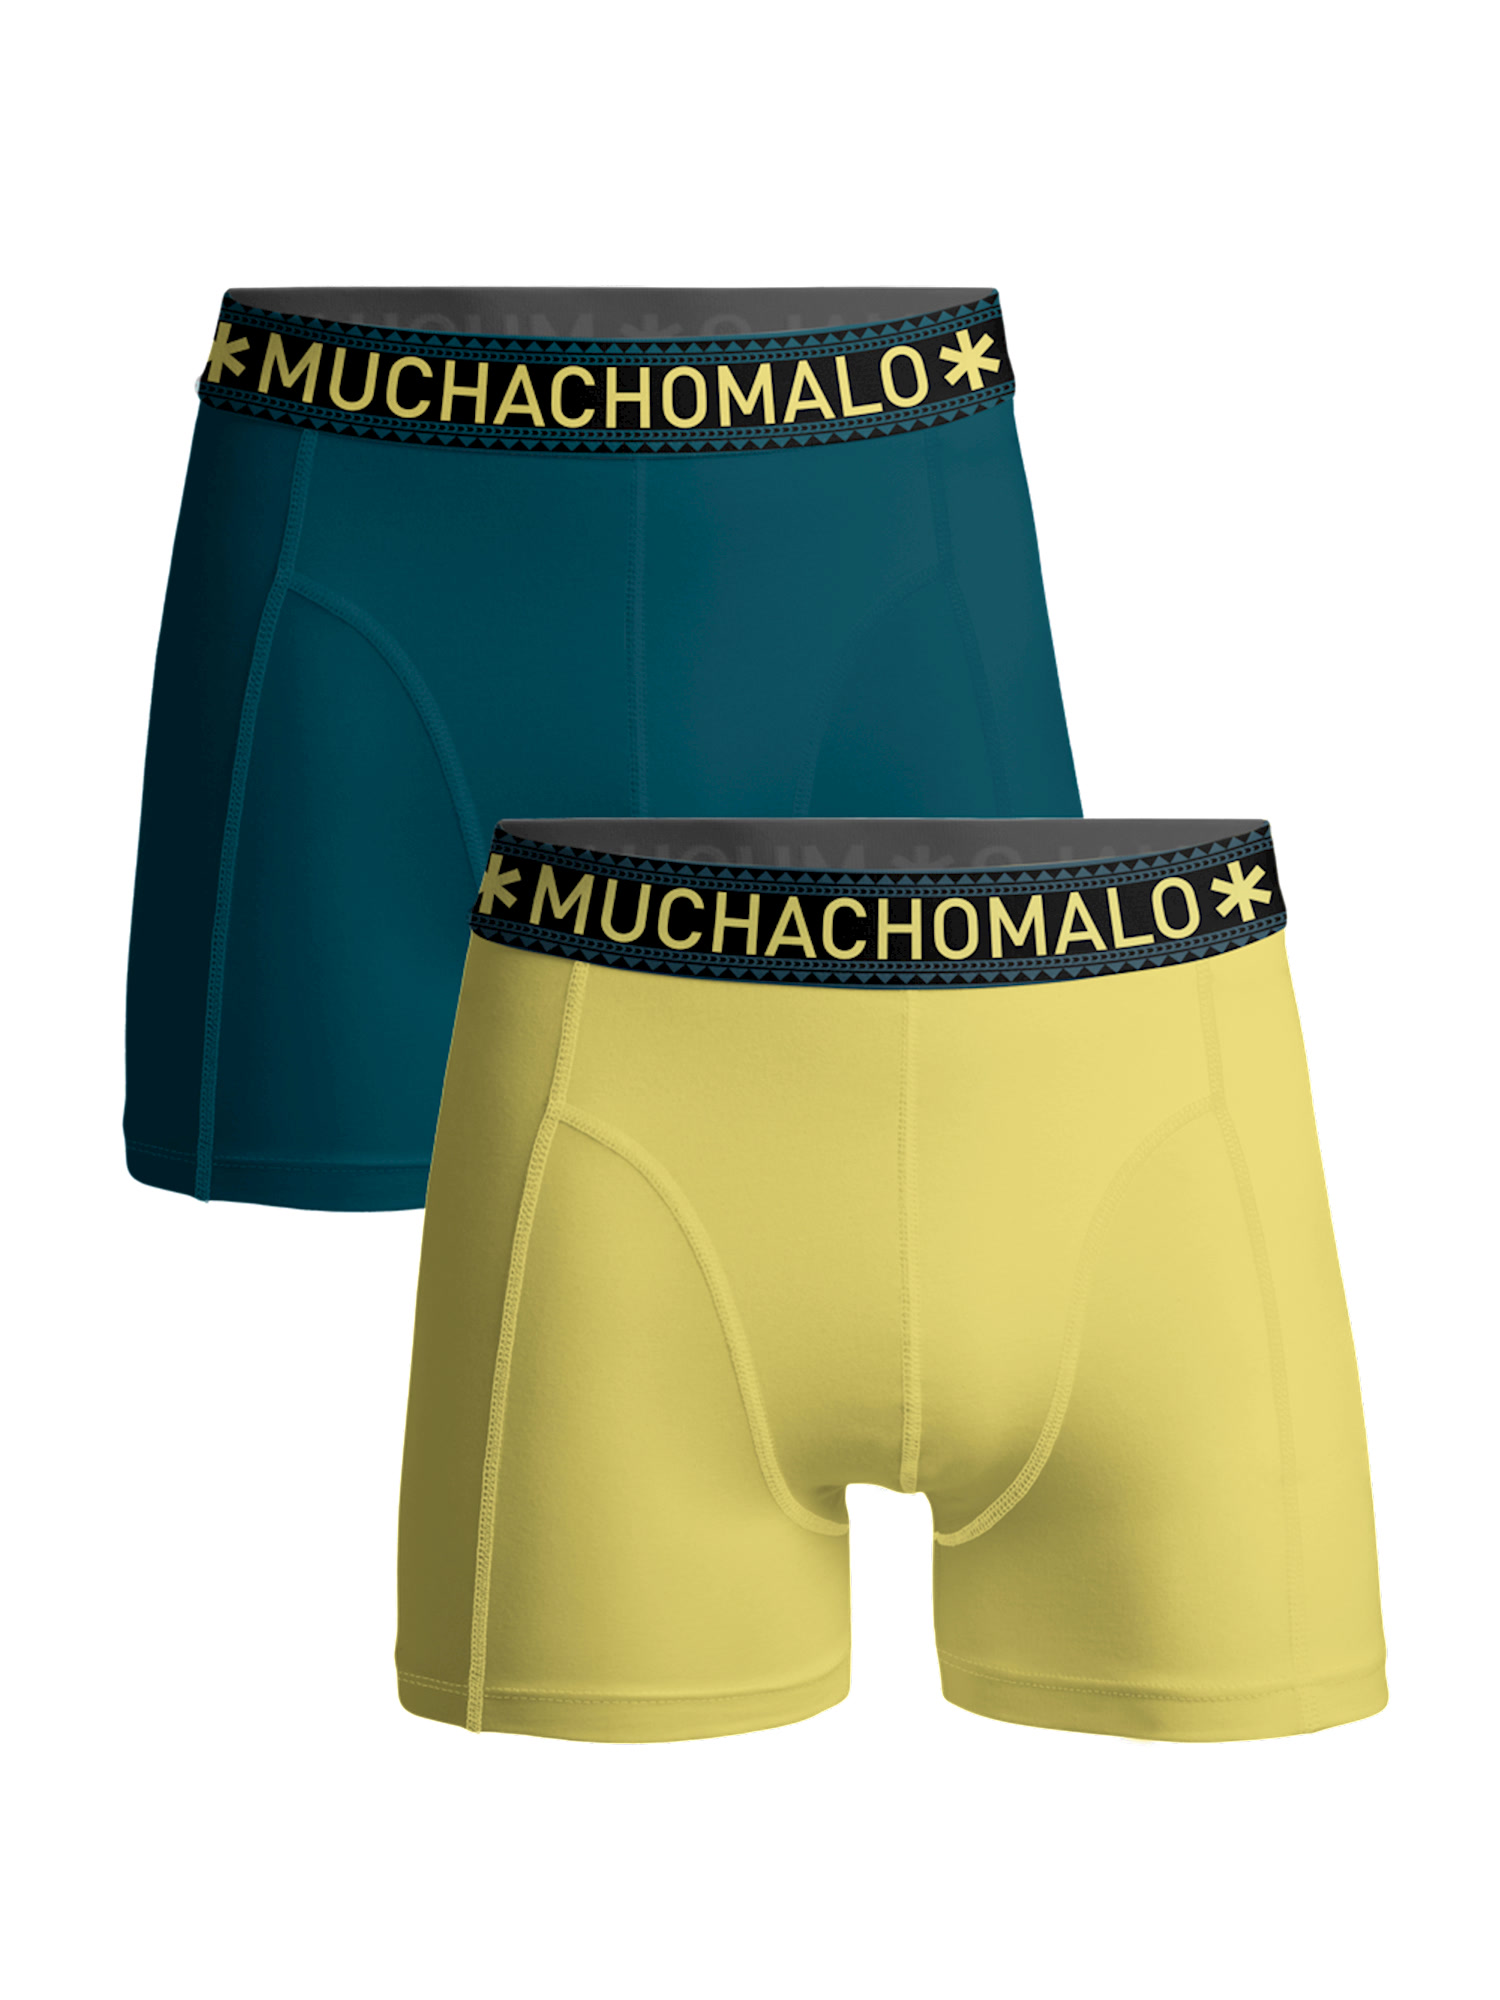 Боксеры Muchachomalo 2er-Set: Boxershorts, цвет Yellow/Blue боксеры muchachomalo 2er set boxershorts цвет blue blue